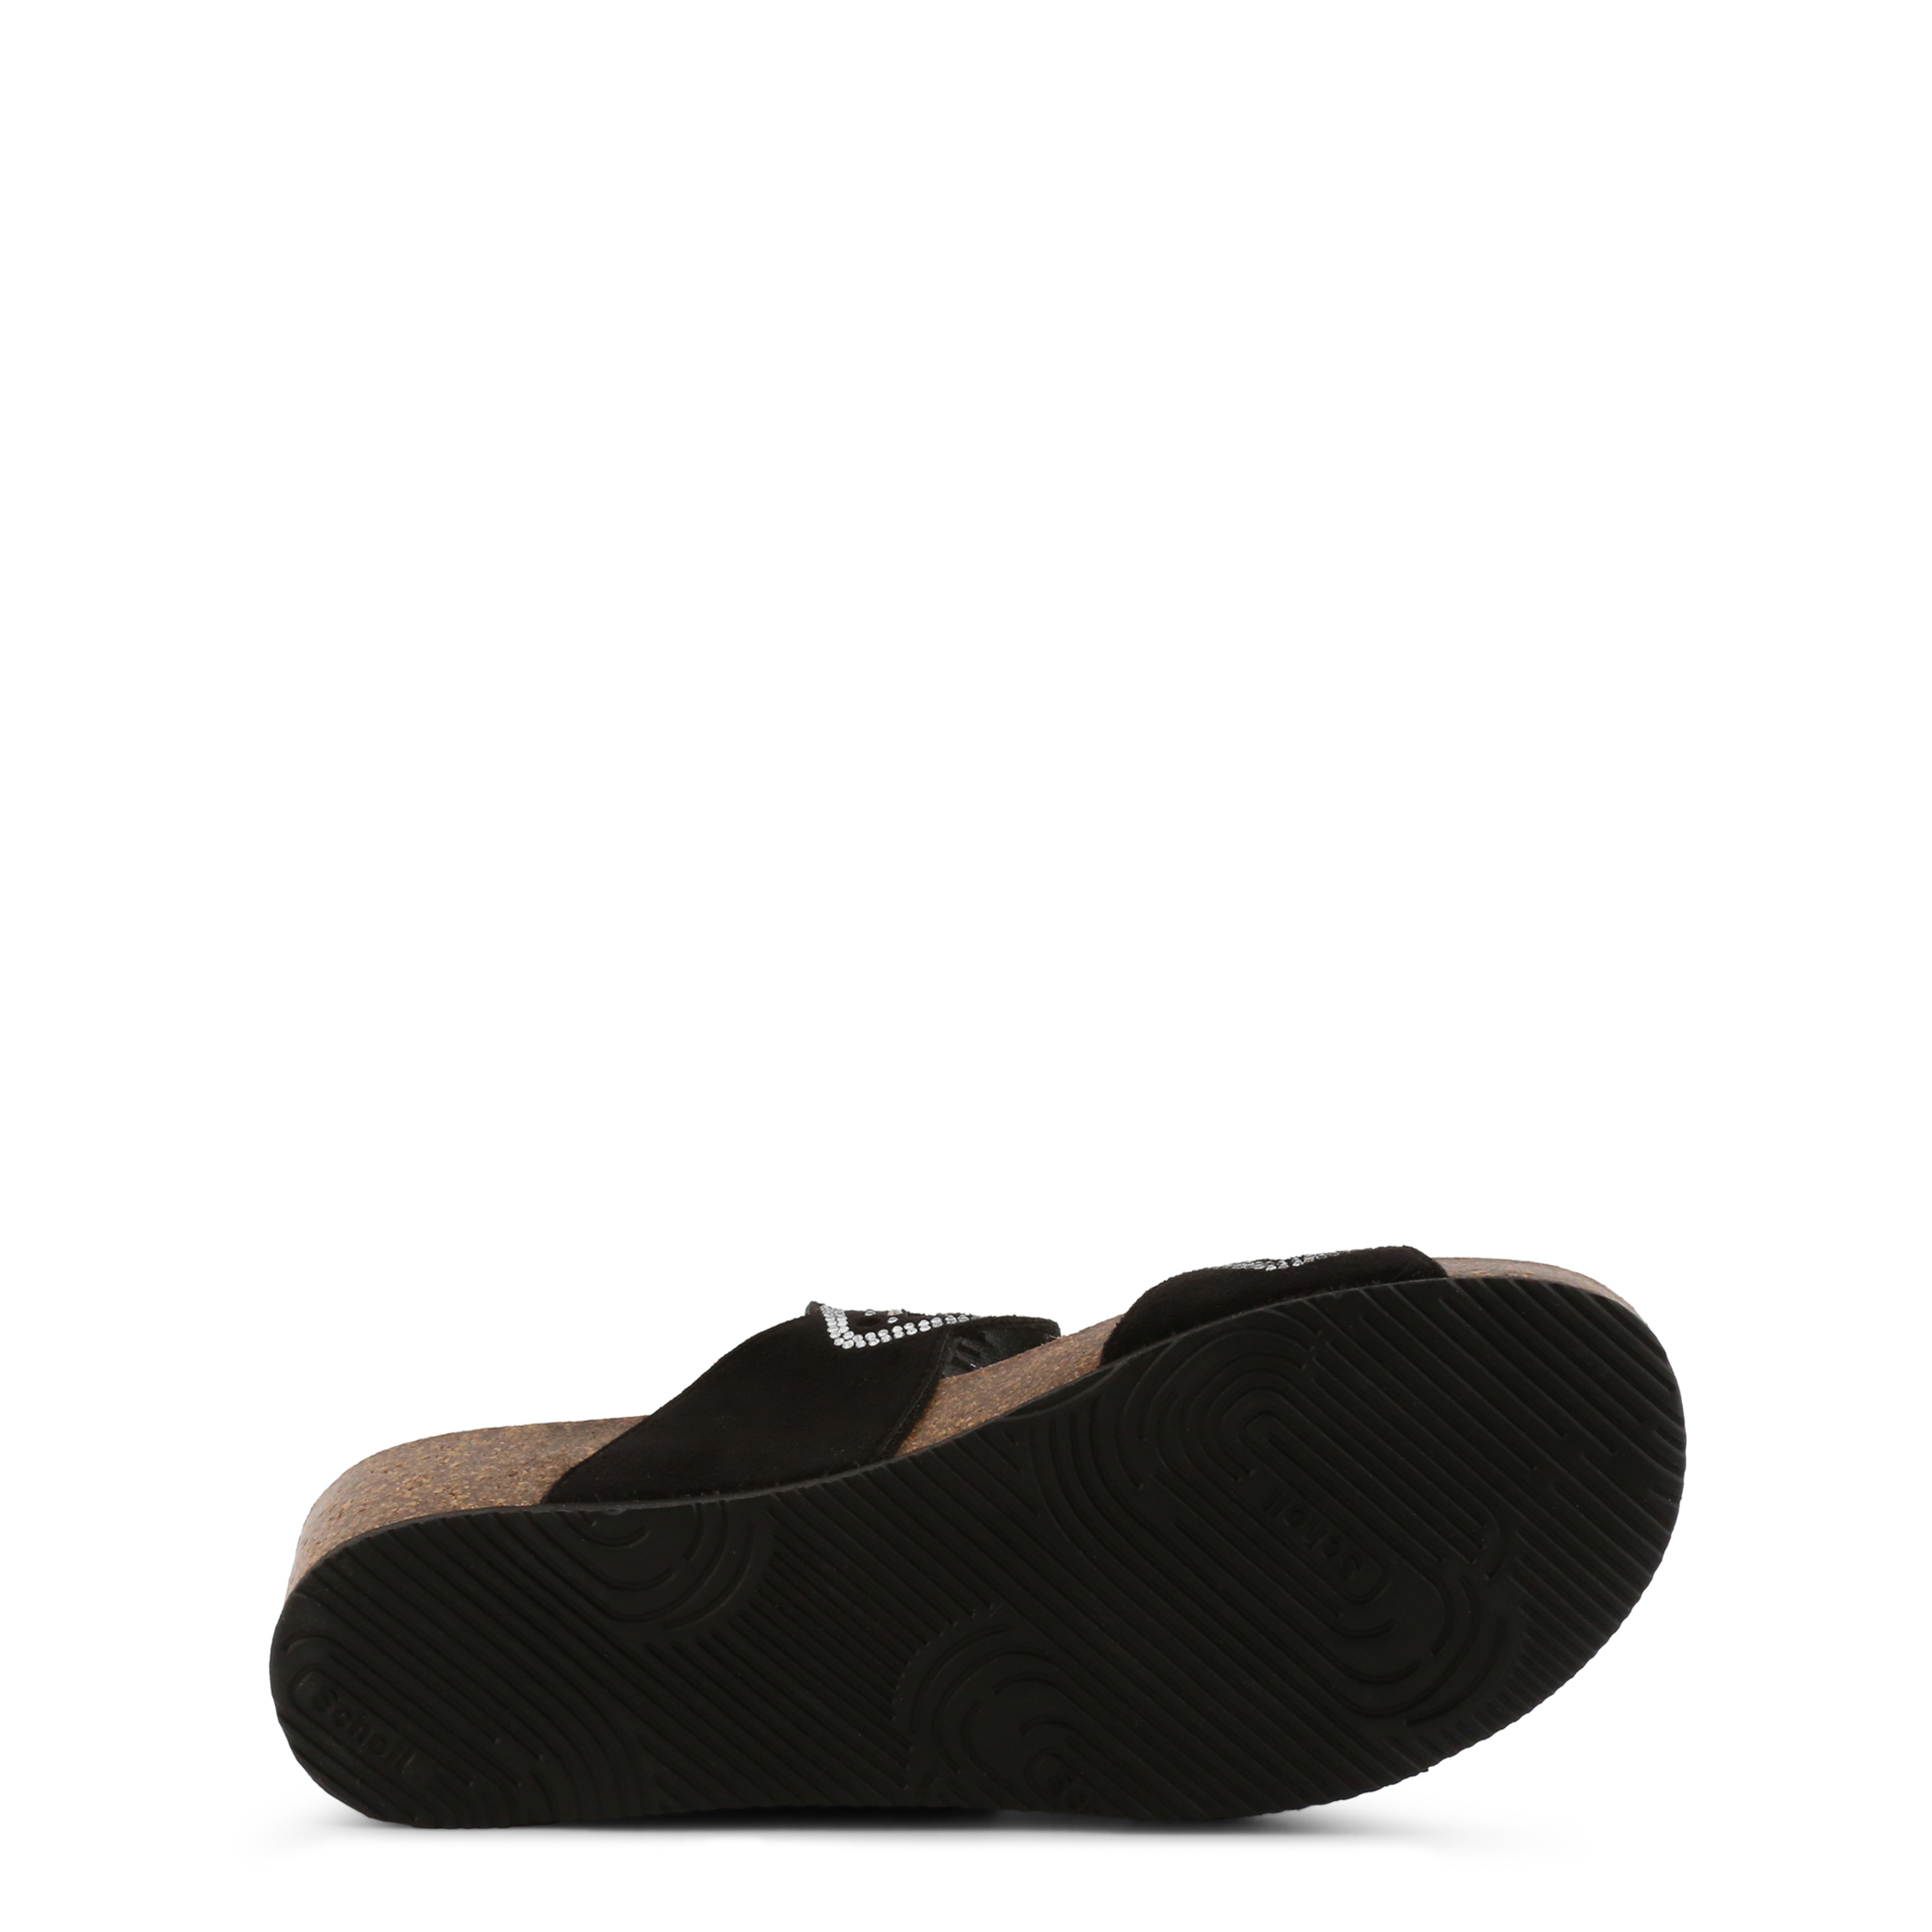 Dr Scholl Black Flip Flops for Women - CAMILLA-F27823